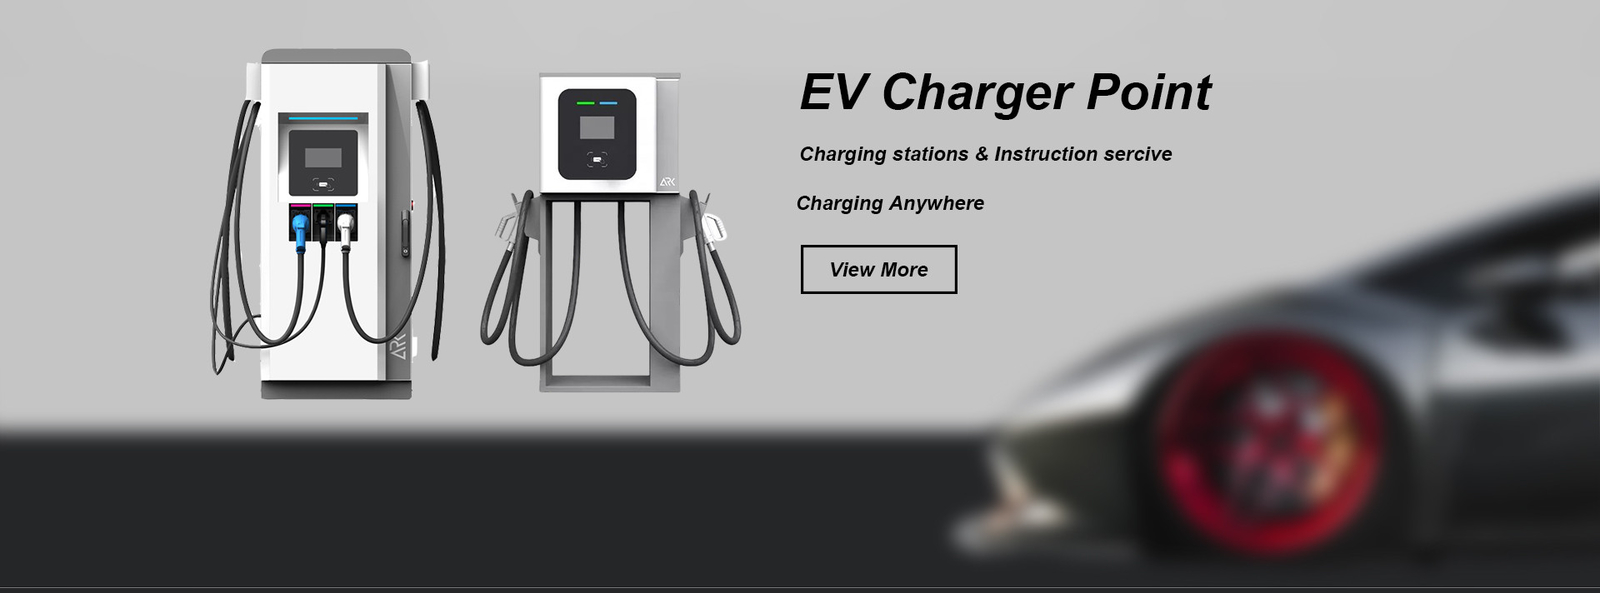 کیفیت نقطه شارژ EV کارخانه